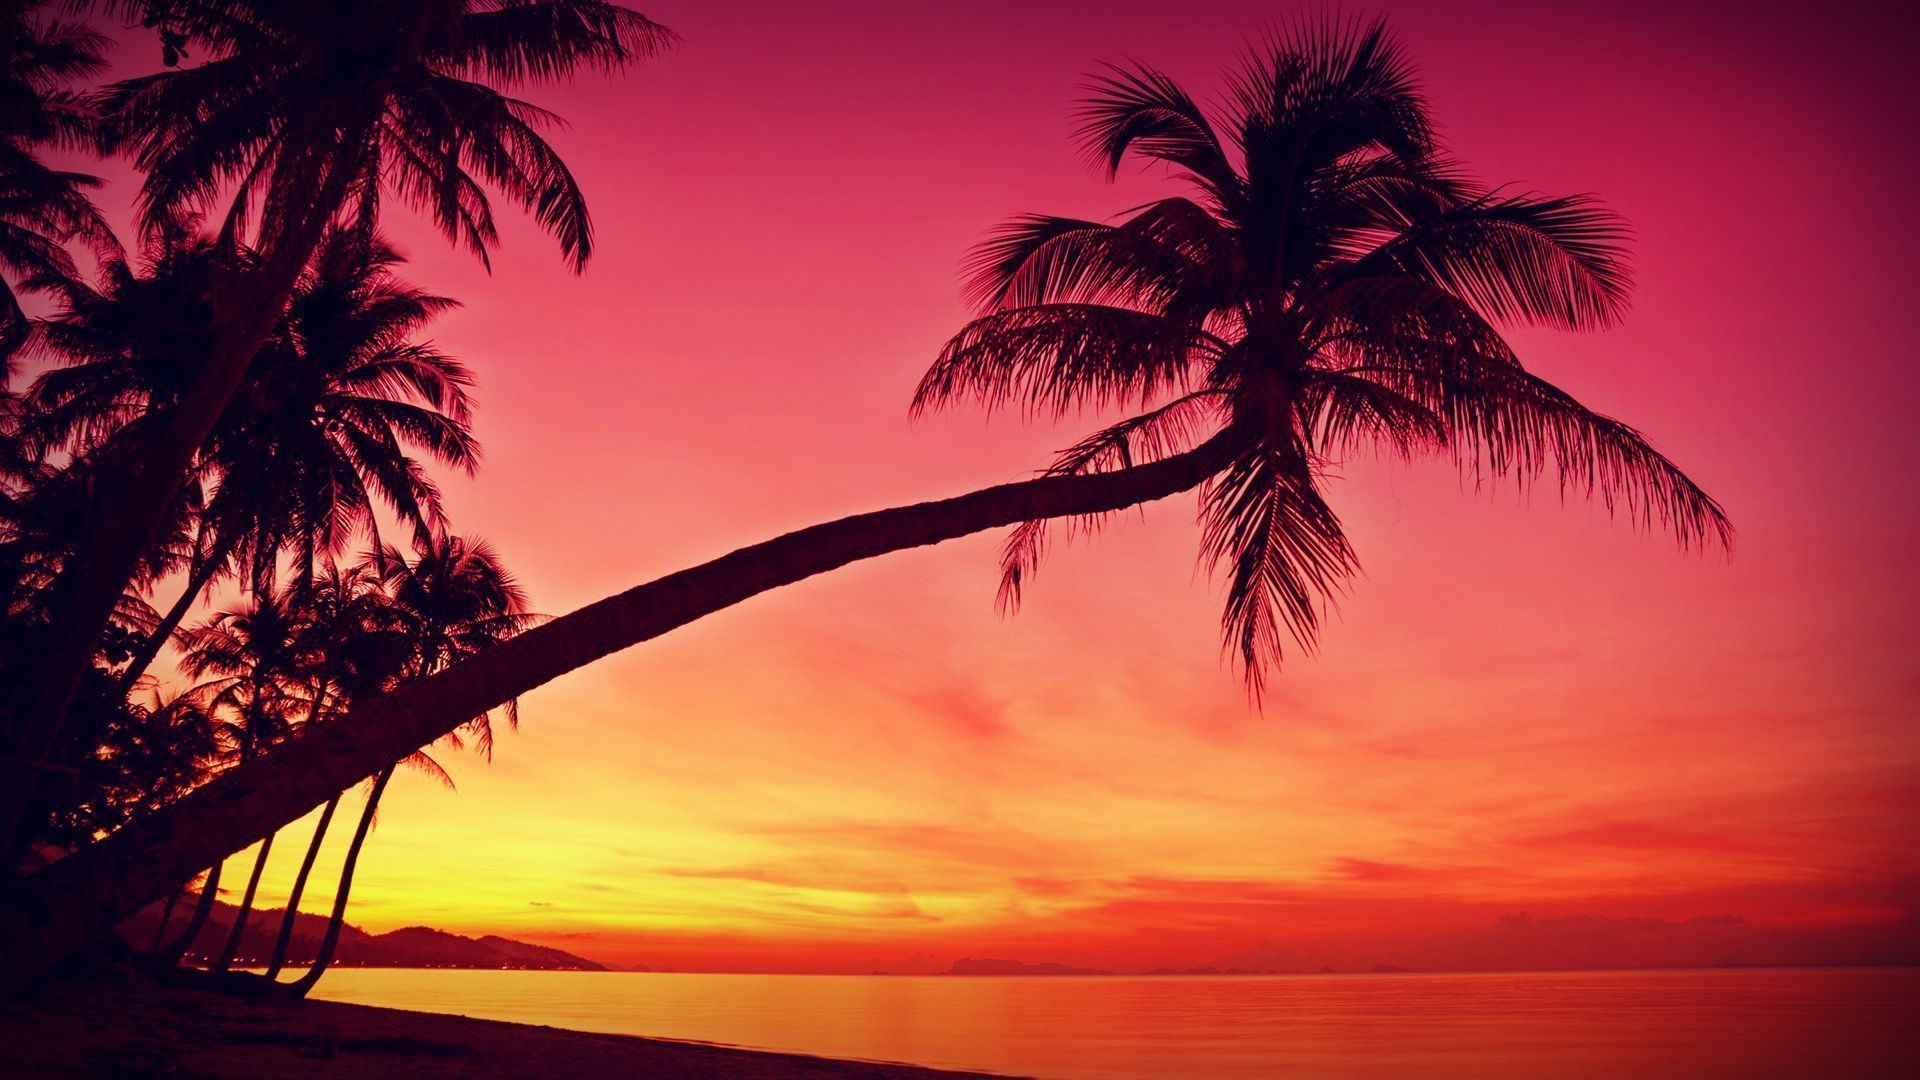 1920x1080 Palm Trees And Sunset Ð¡ÑÐ¾ÐºÐ¾Ð²ÑÐµ ÑÑÑÐ°Ð¶Ð¸ Ð´Ð»Ñ Ð²Ð¸Ð´ÐµÐ¾ Shutterstock 1080x-Sunset -19.html